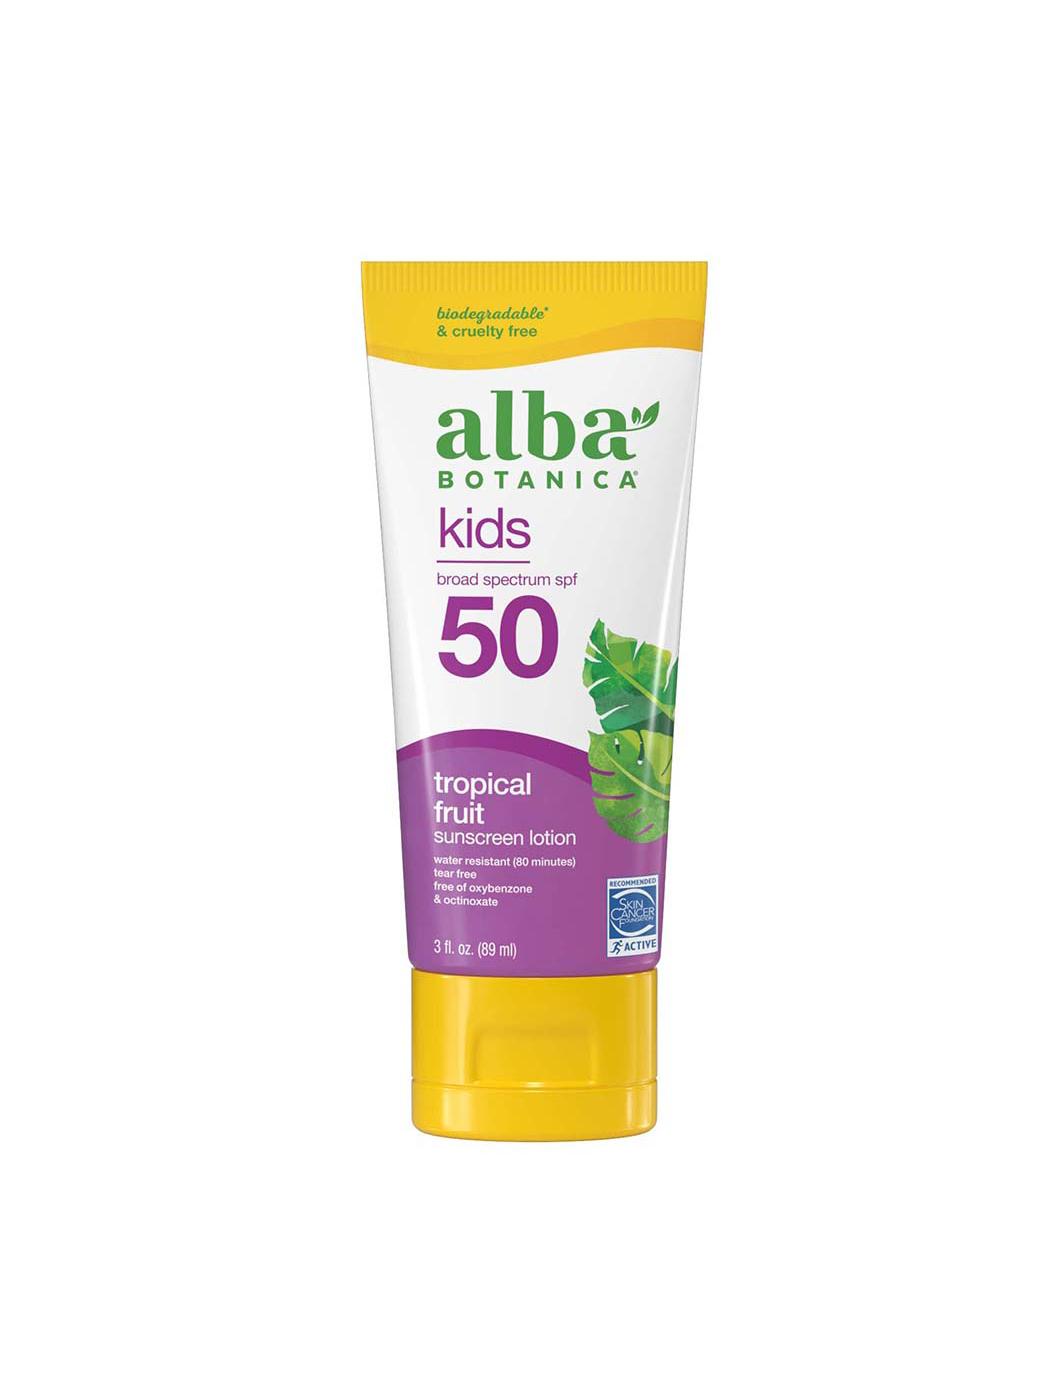 Alba Botanica Kids Sunscreen Lotion SPF 45 - Tropical Fruit; image 1 of 2